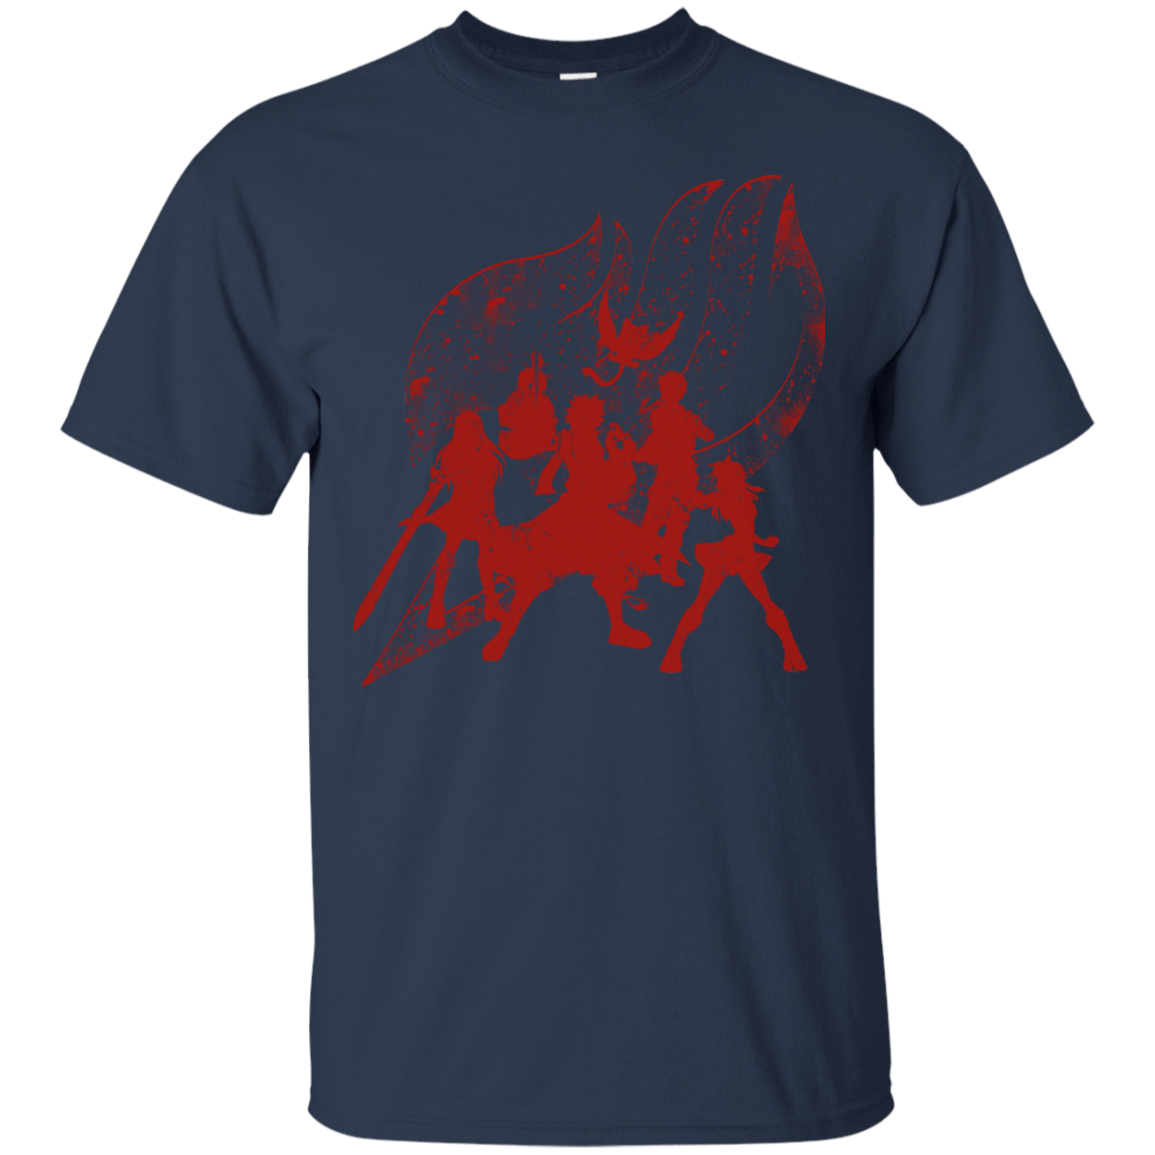 T-Shirts Navy / S Power Guild T-Shirt